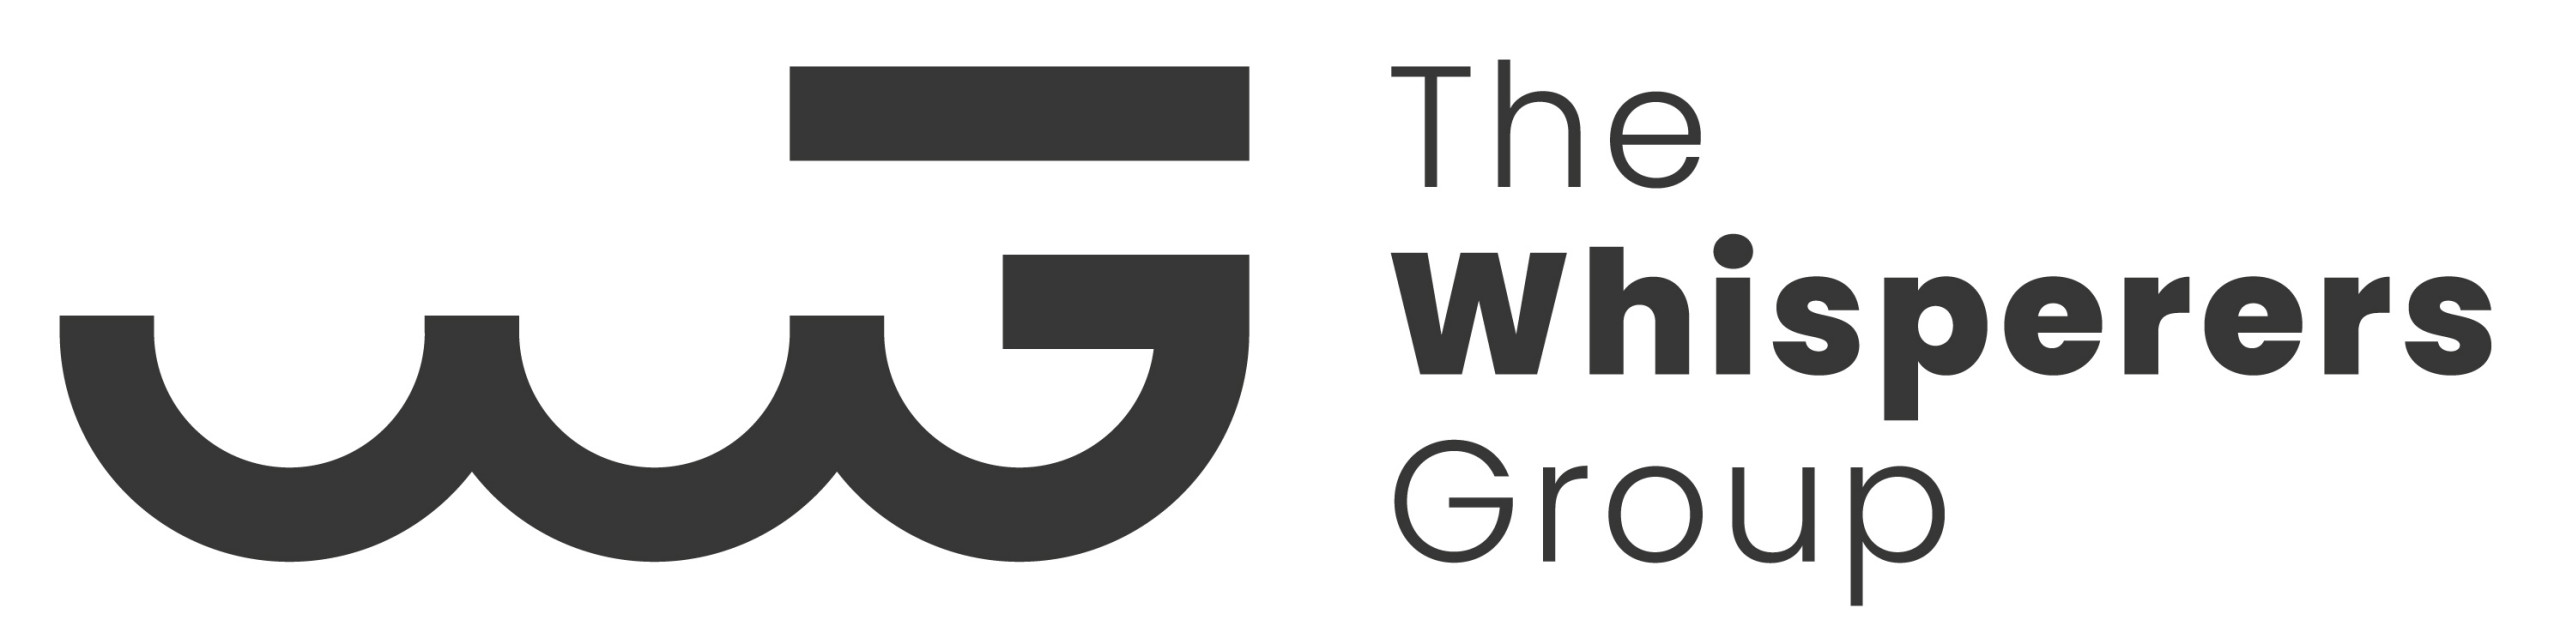 The Whisperers Group logo